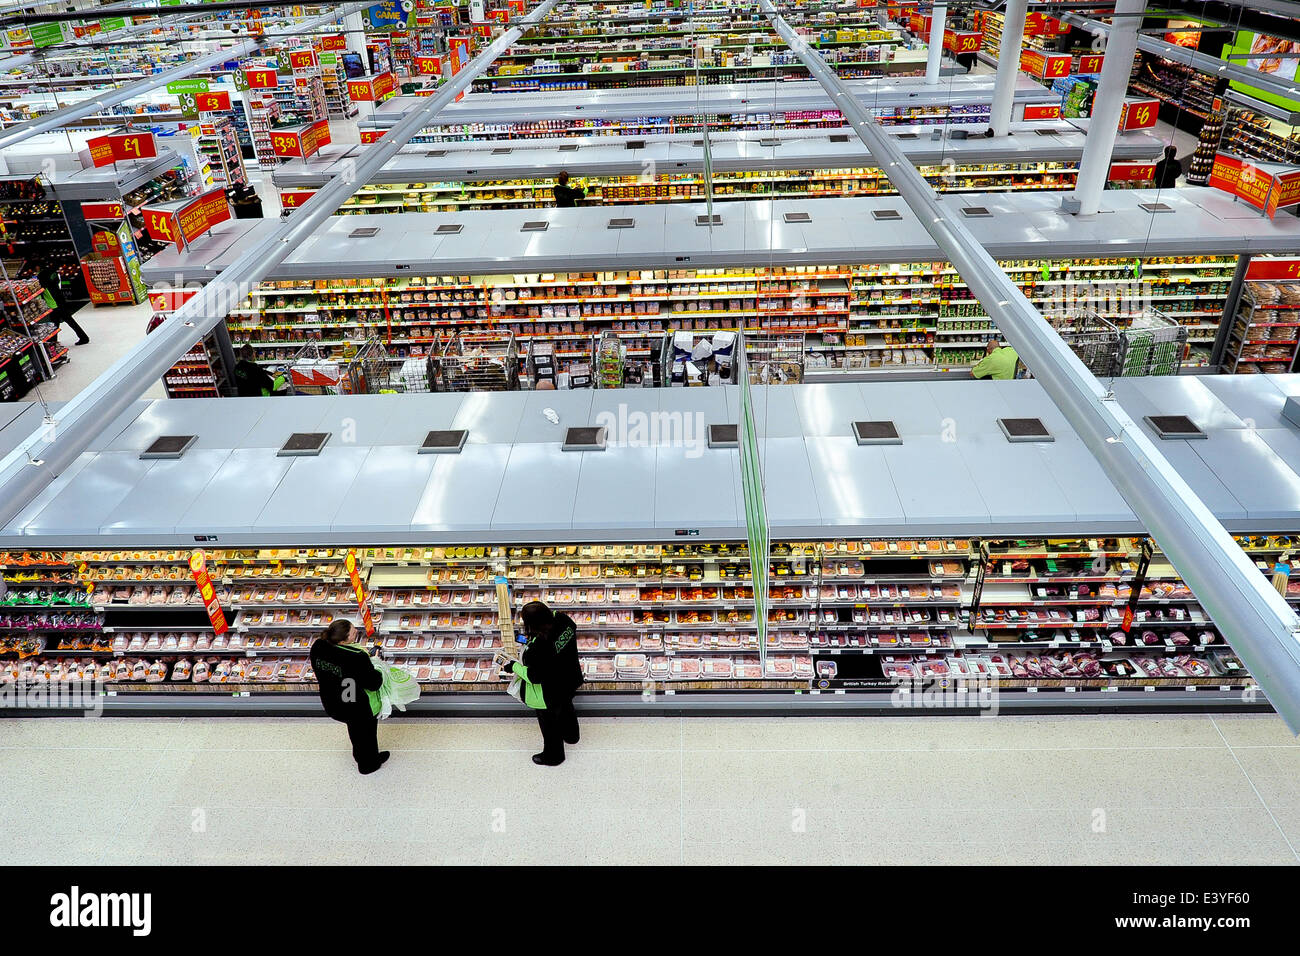 asda hypermarket market interior 2014 Stock Photo